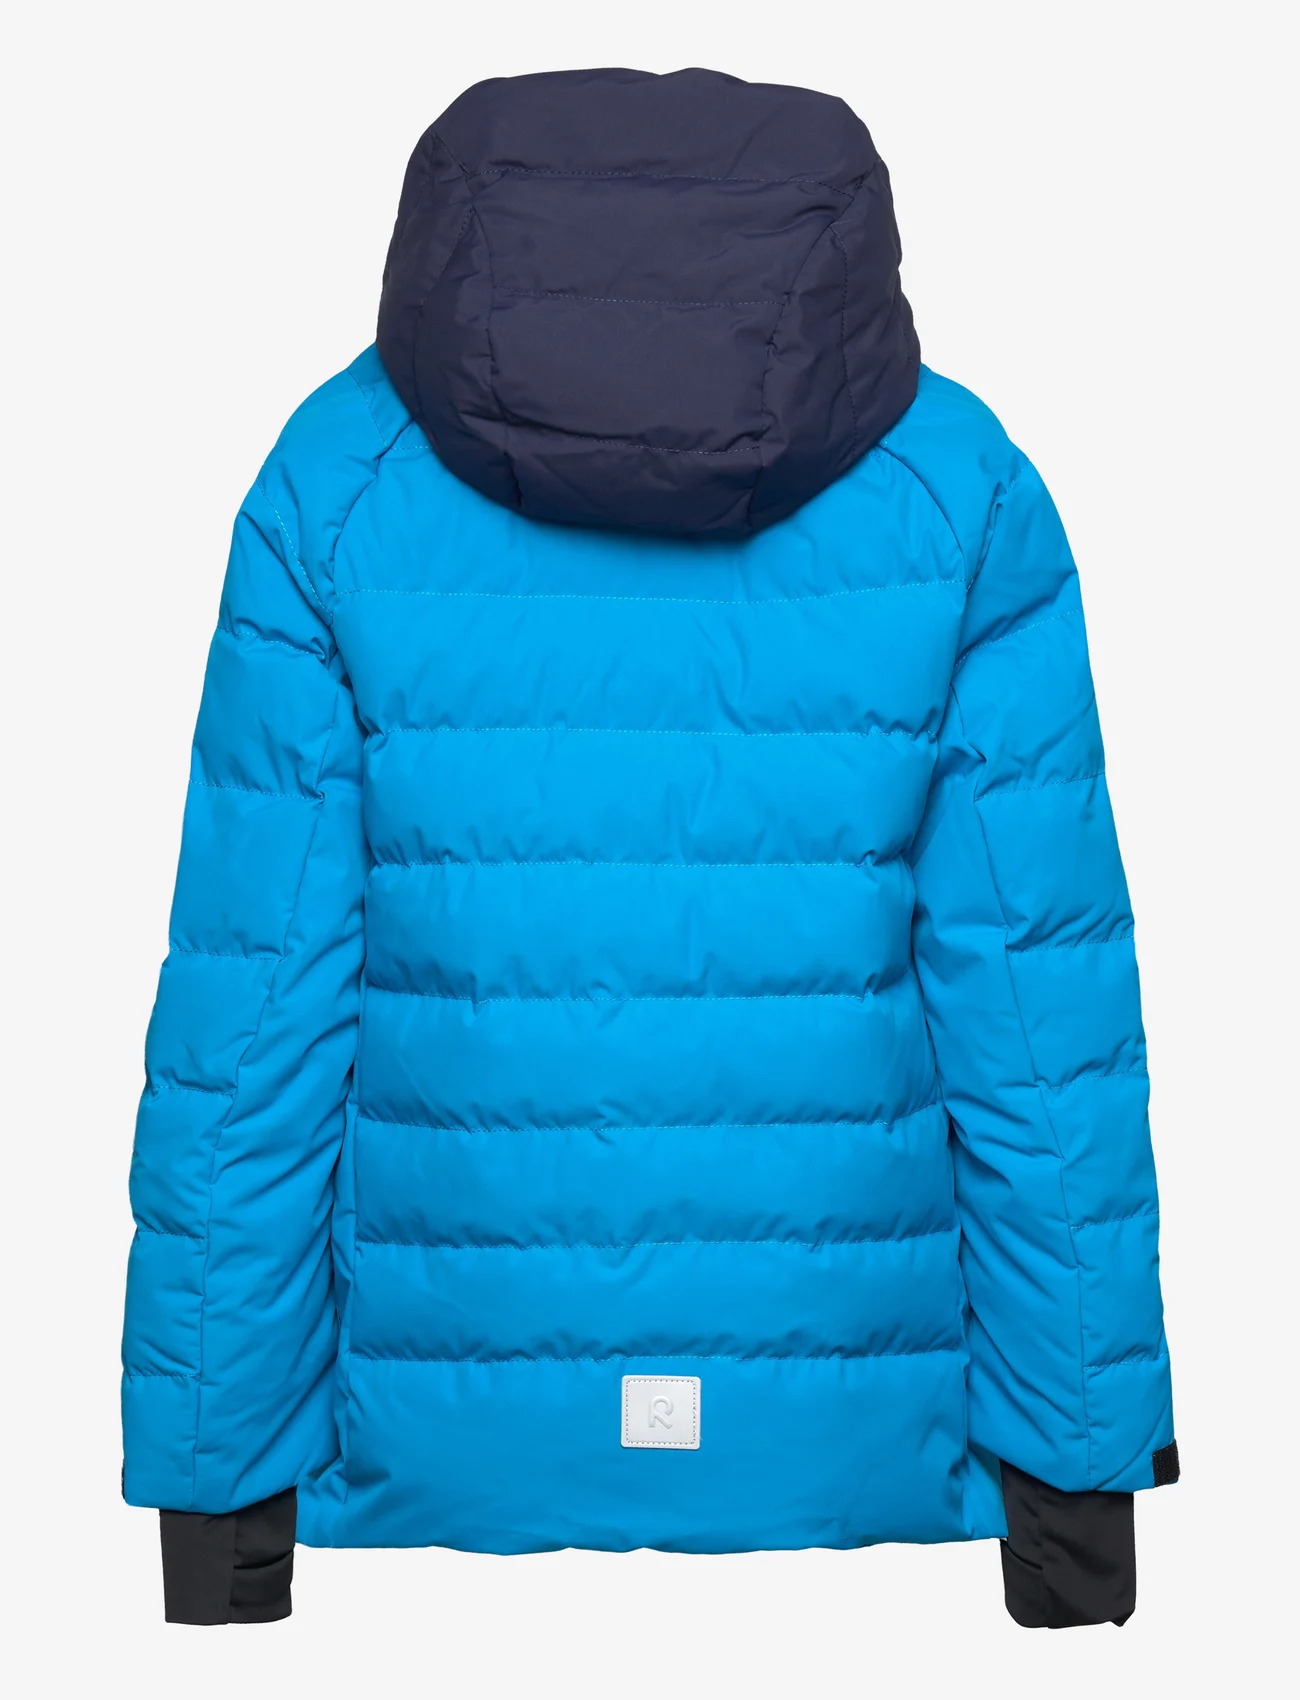 Reima - Juniors' Winter jacket Kuosku - winter jackets - true blue - 1